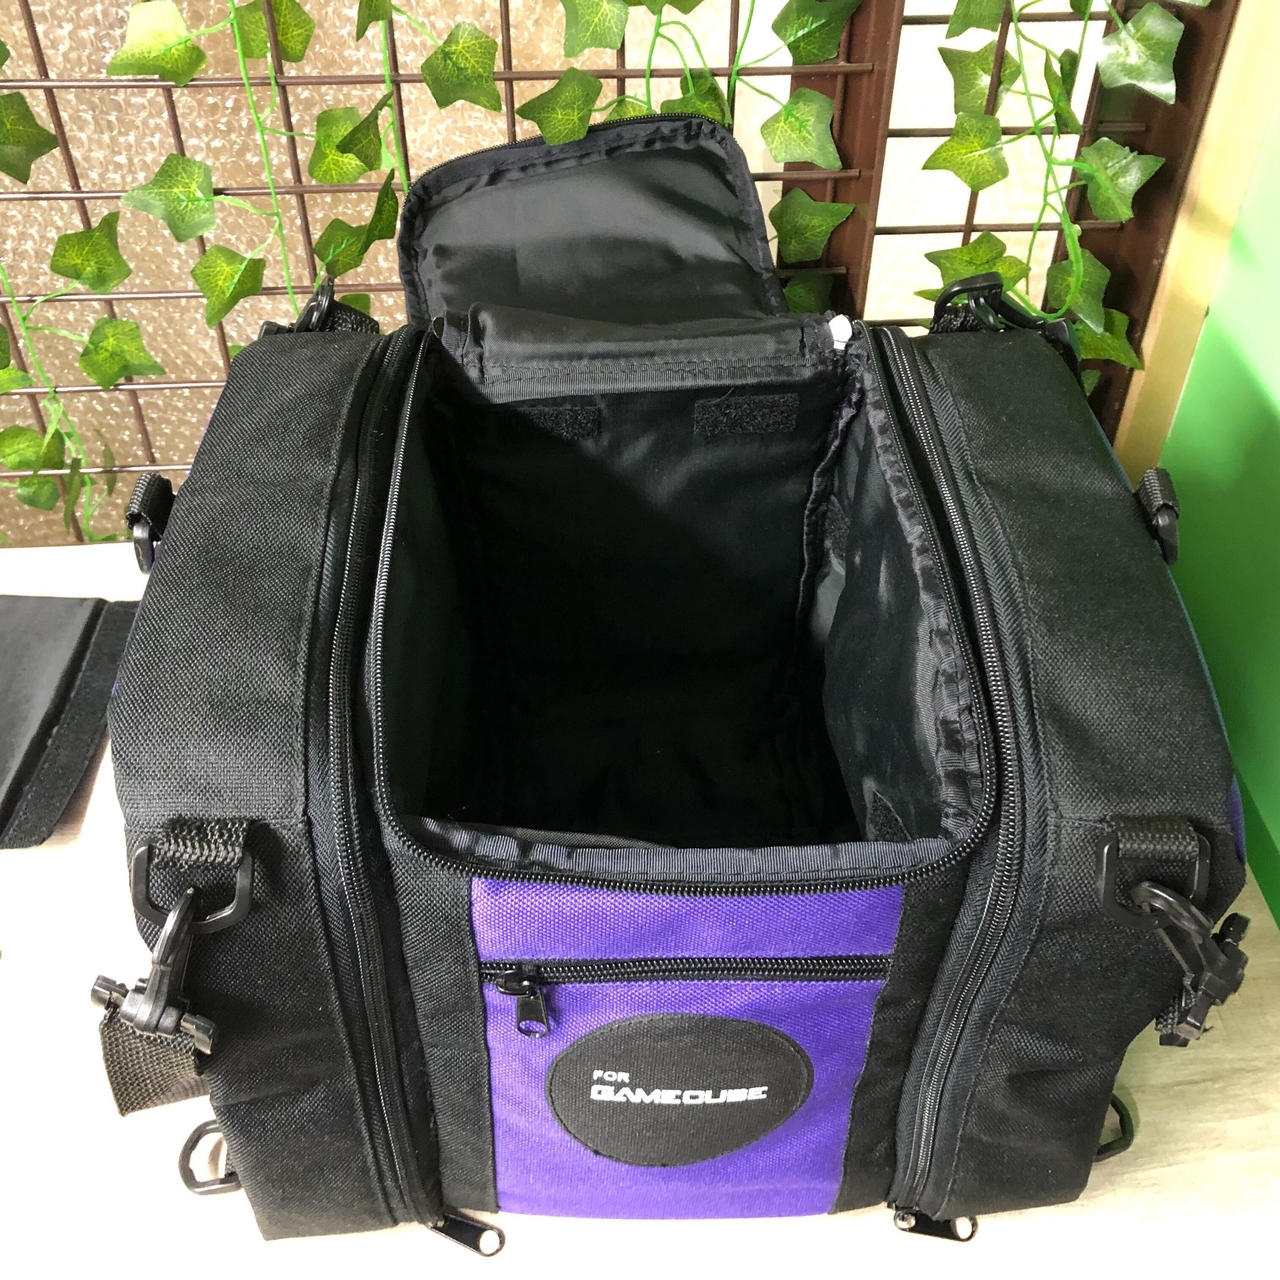 Gamecube Travel Bag - Gamecube Hardware - 4